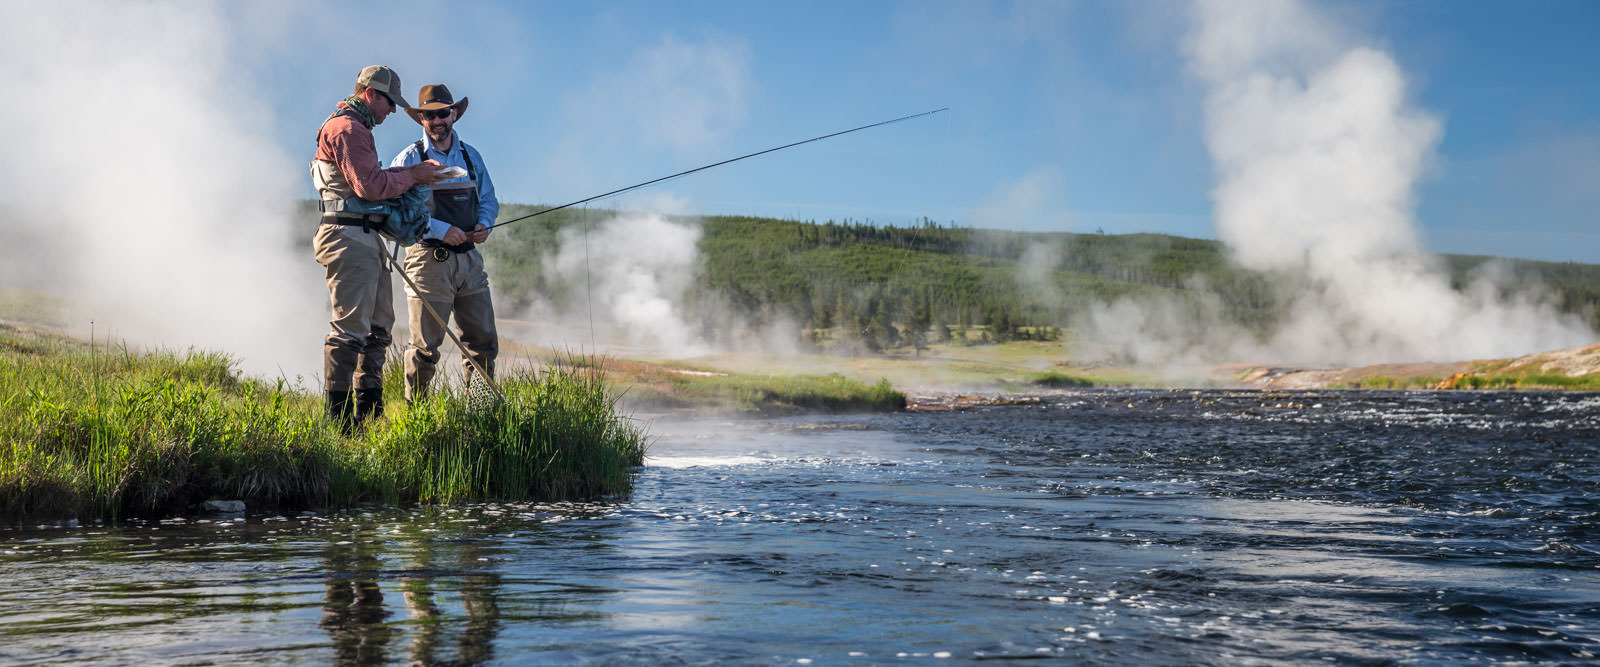 Fly fishing Yellowstone National Park